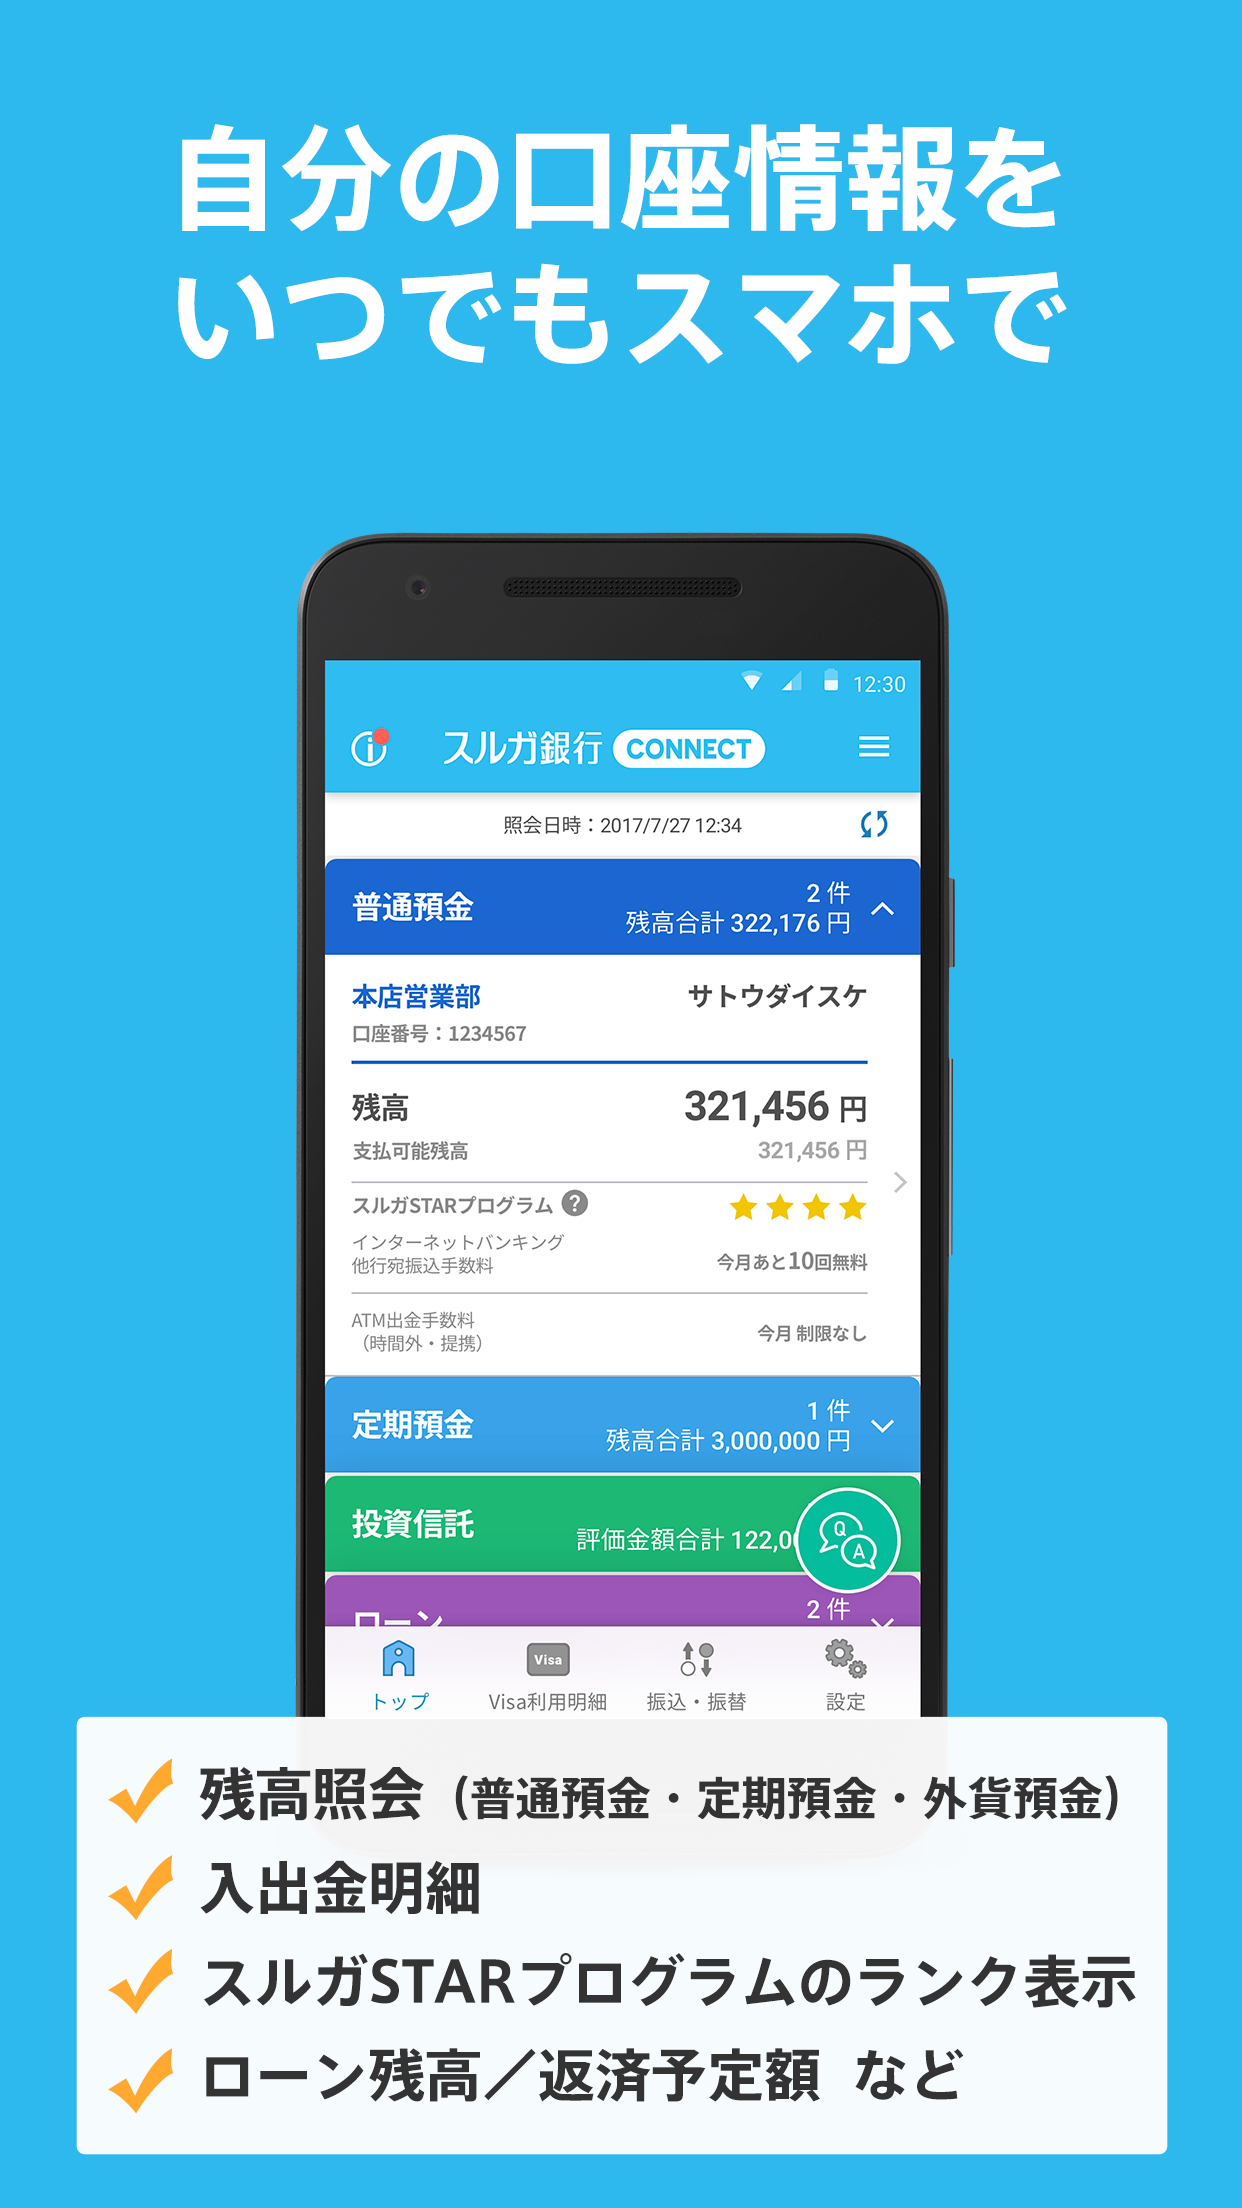 Android application スルガ銀行CONNECT screenshort